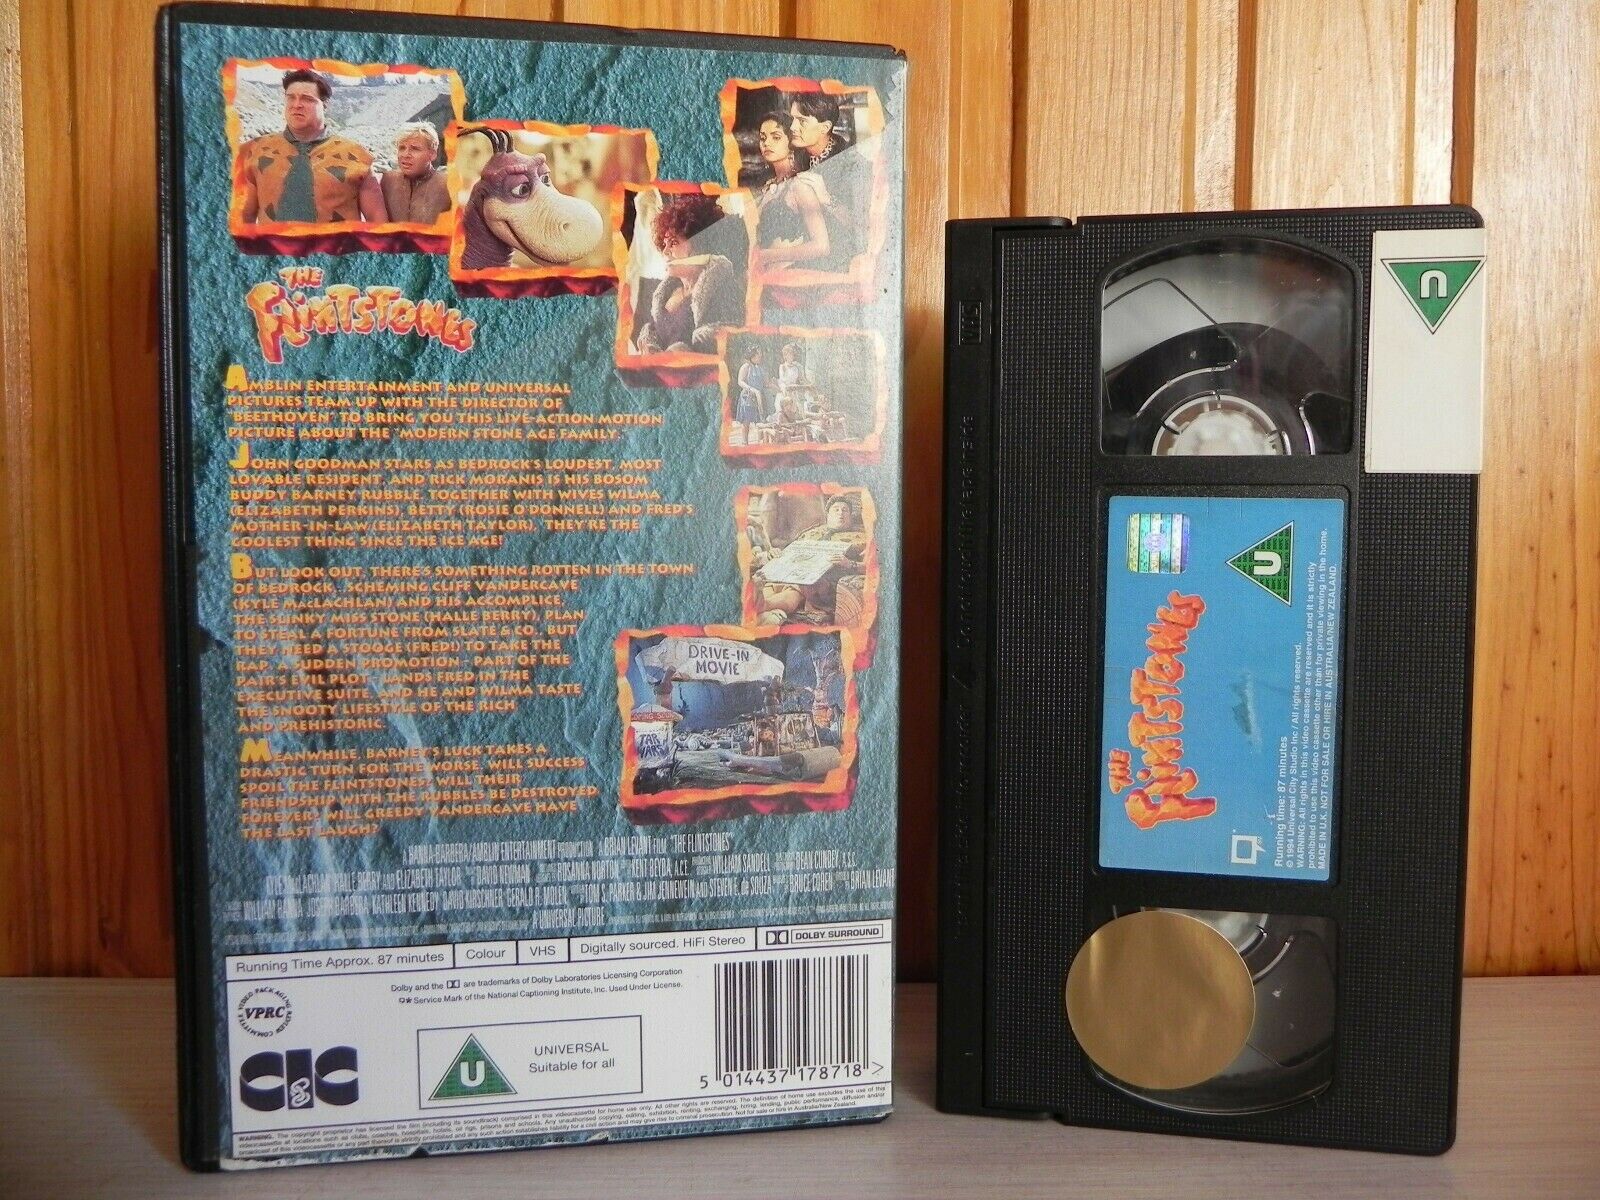 The Flintstones - Big Box - Universal - Family Video - Comedy - Halle Berry VHS-